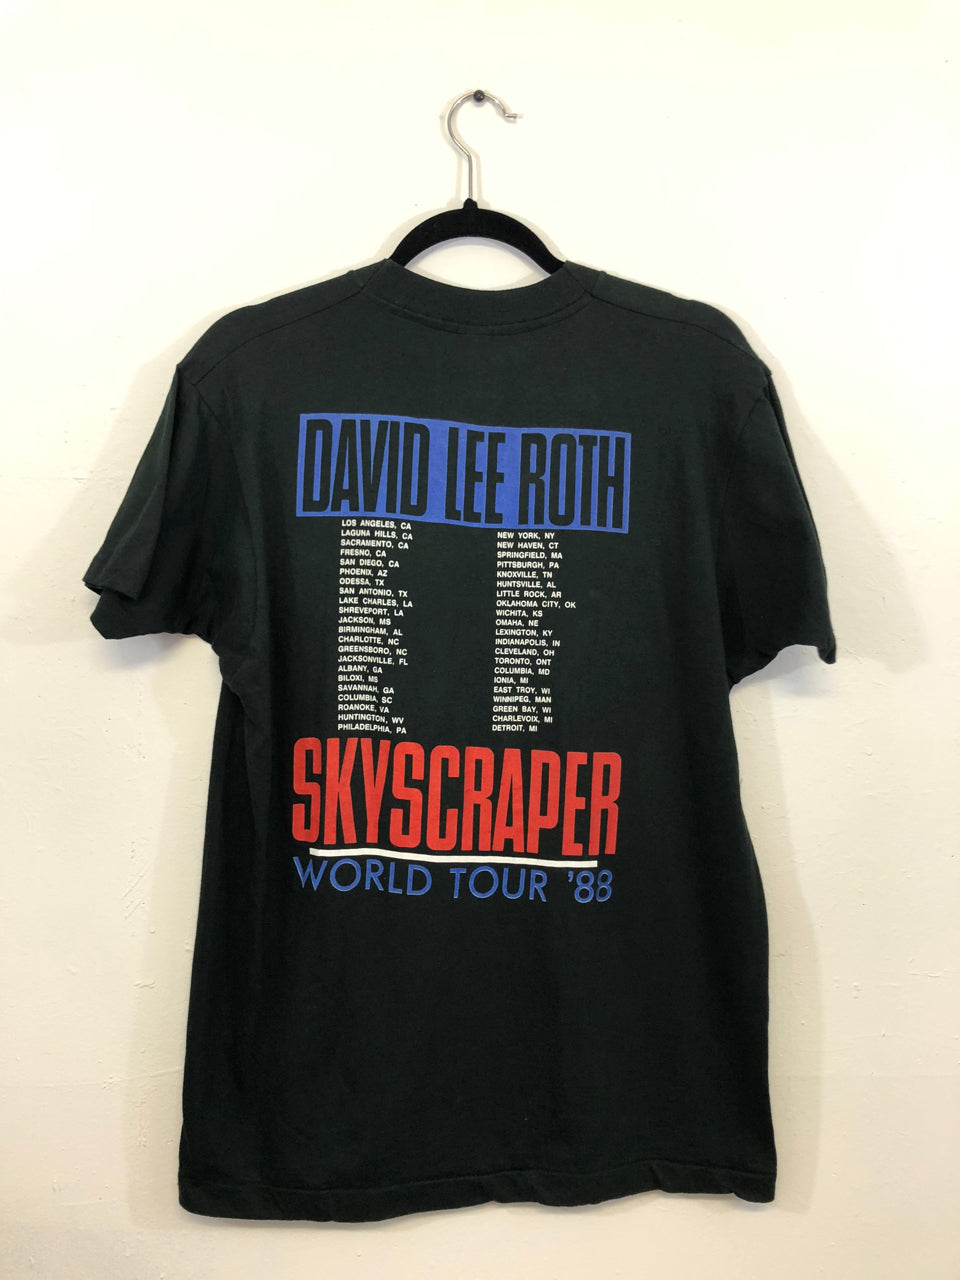 David Lee Roth Skyscraper World Tour '88 T-Shirt